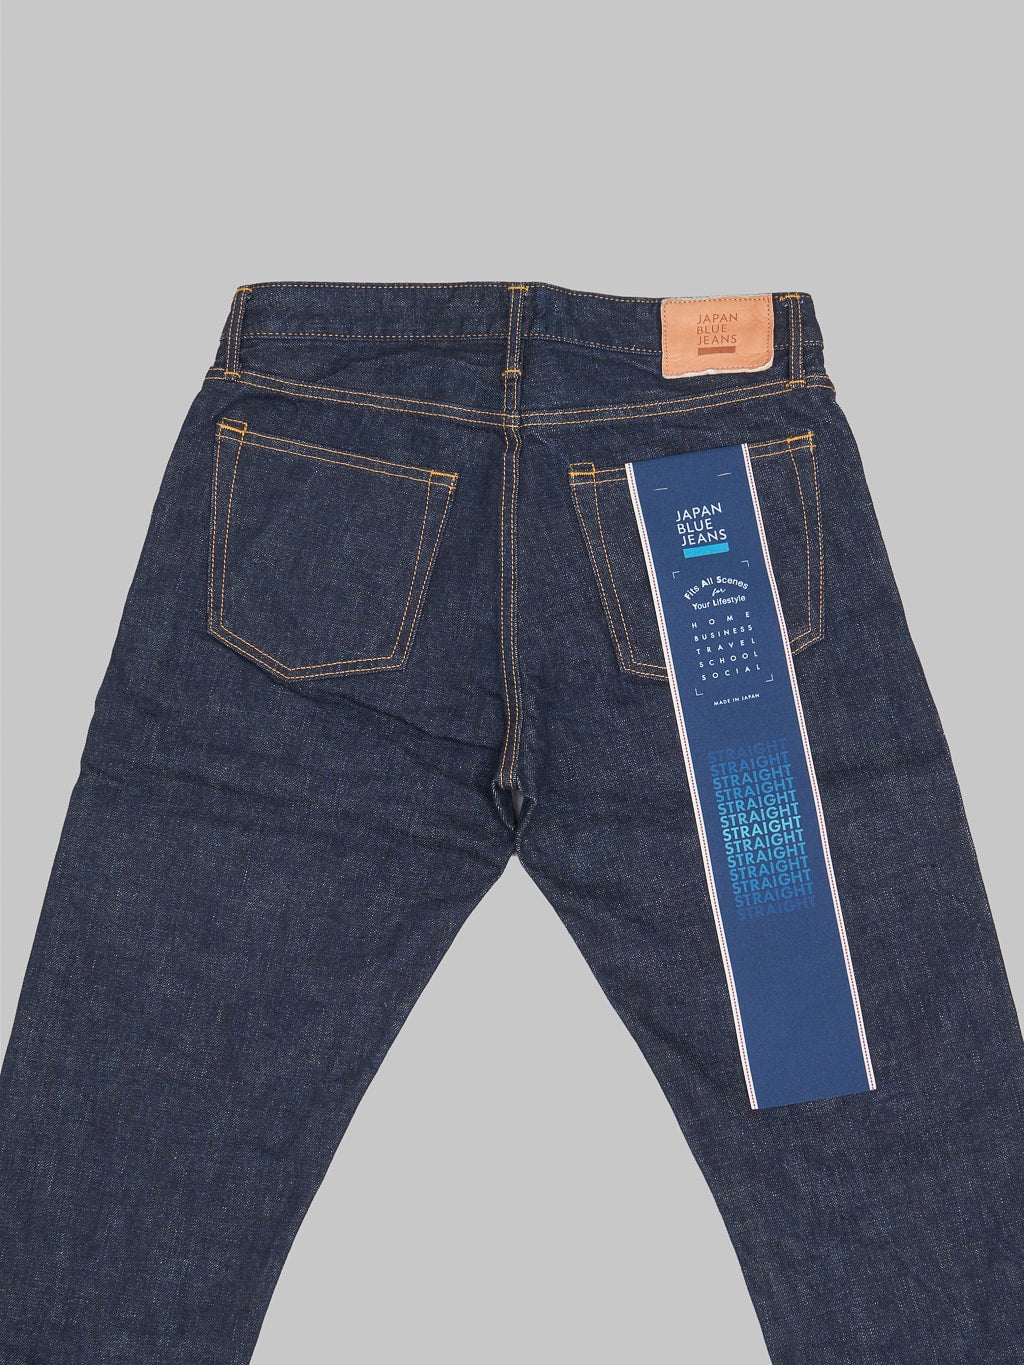 Japan Blue J301 US Cotton Circle Straight Jeans back pockets